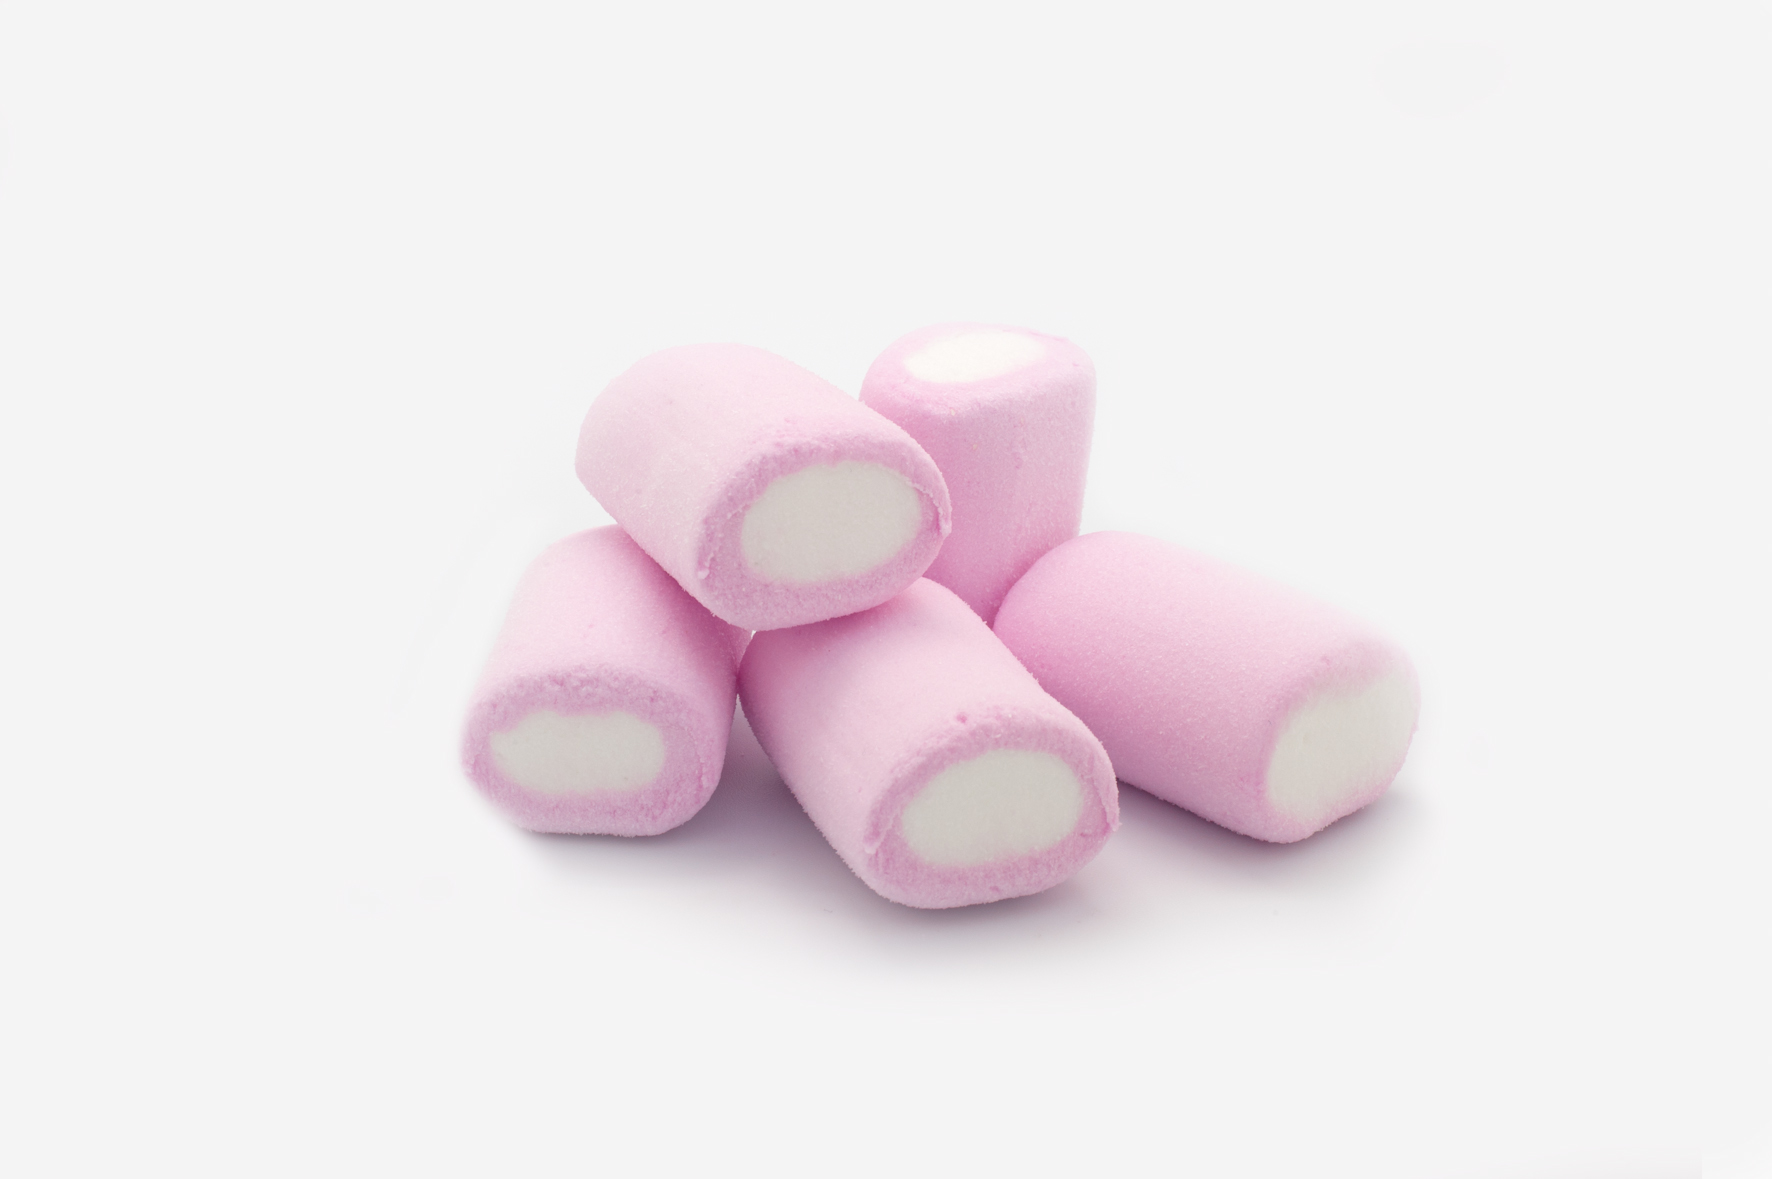 Centered Tubes pink & white marshmallow